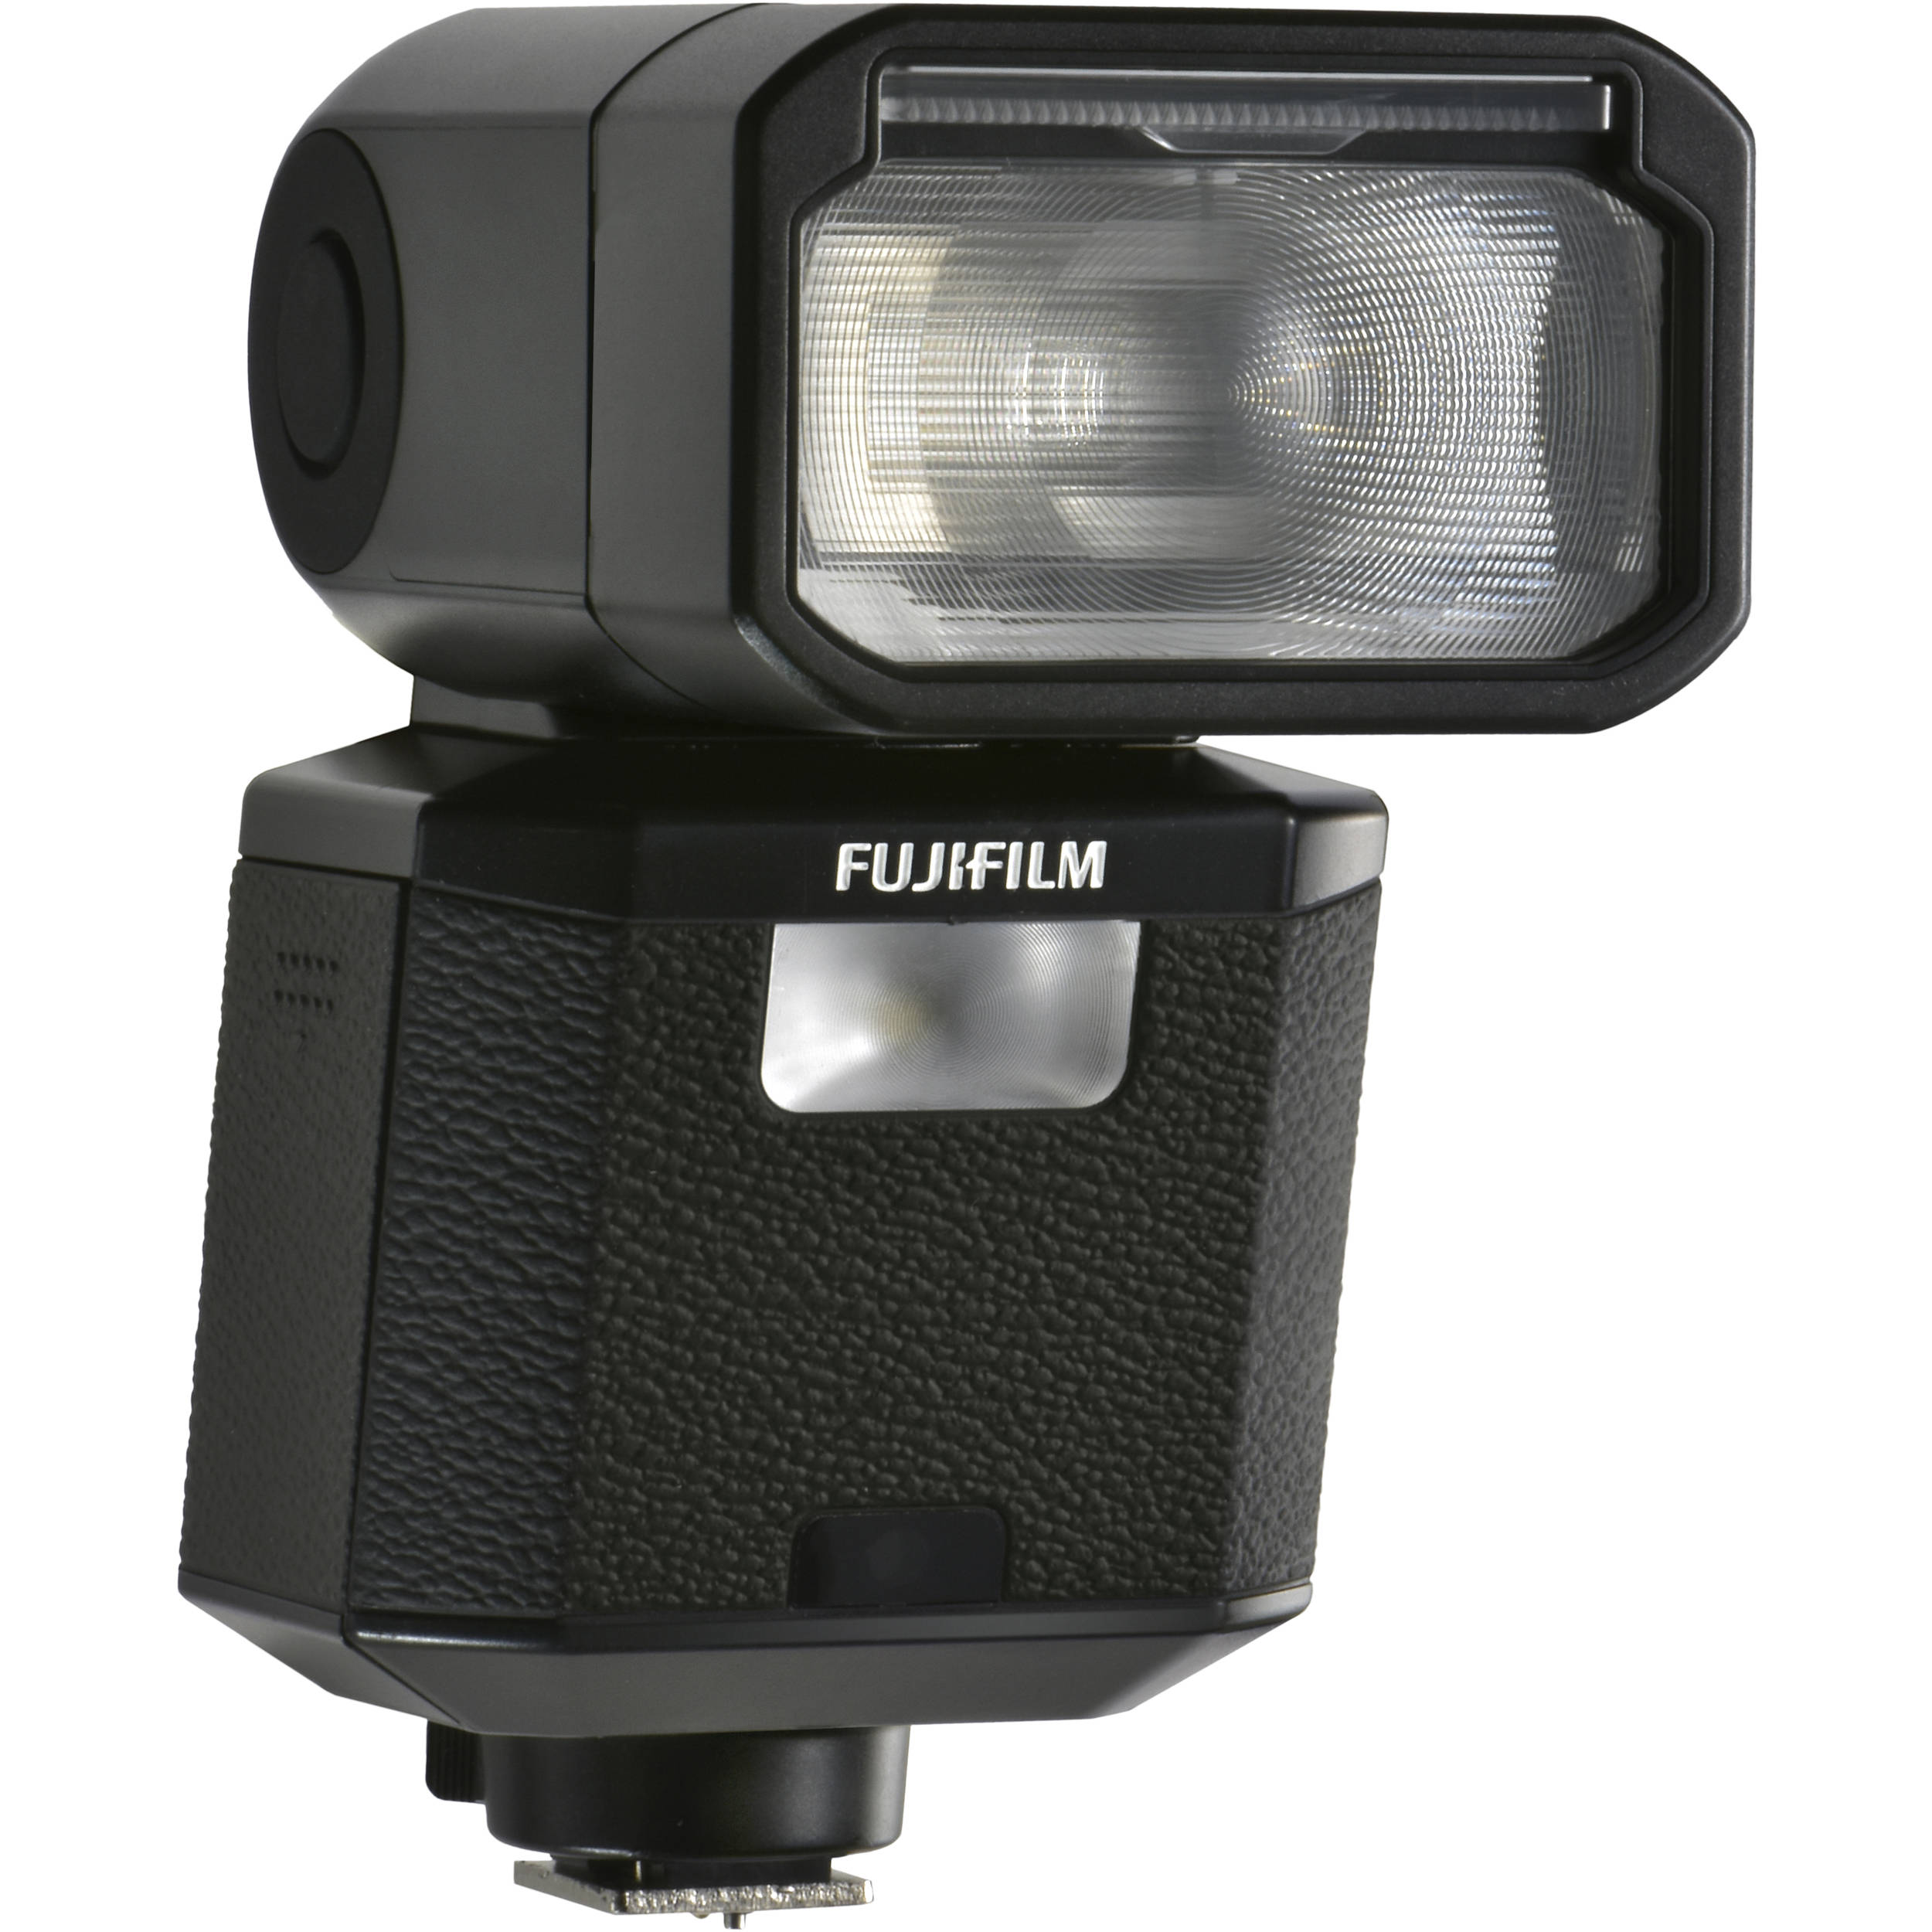 Fujifilm EF-X500 Flash 600017352 B&H Photo Video